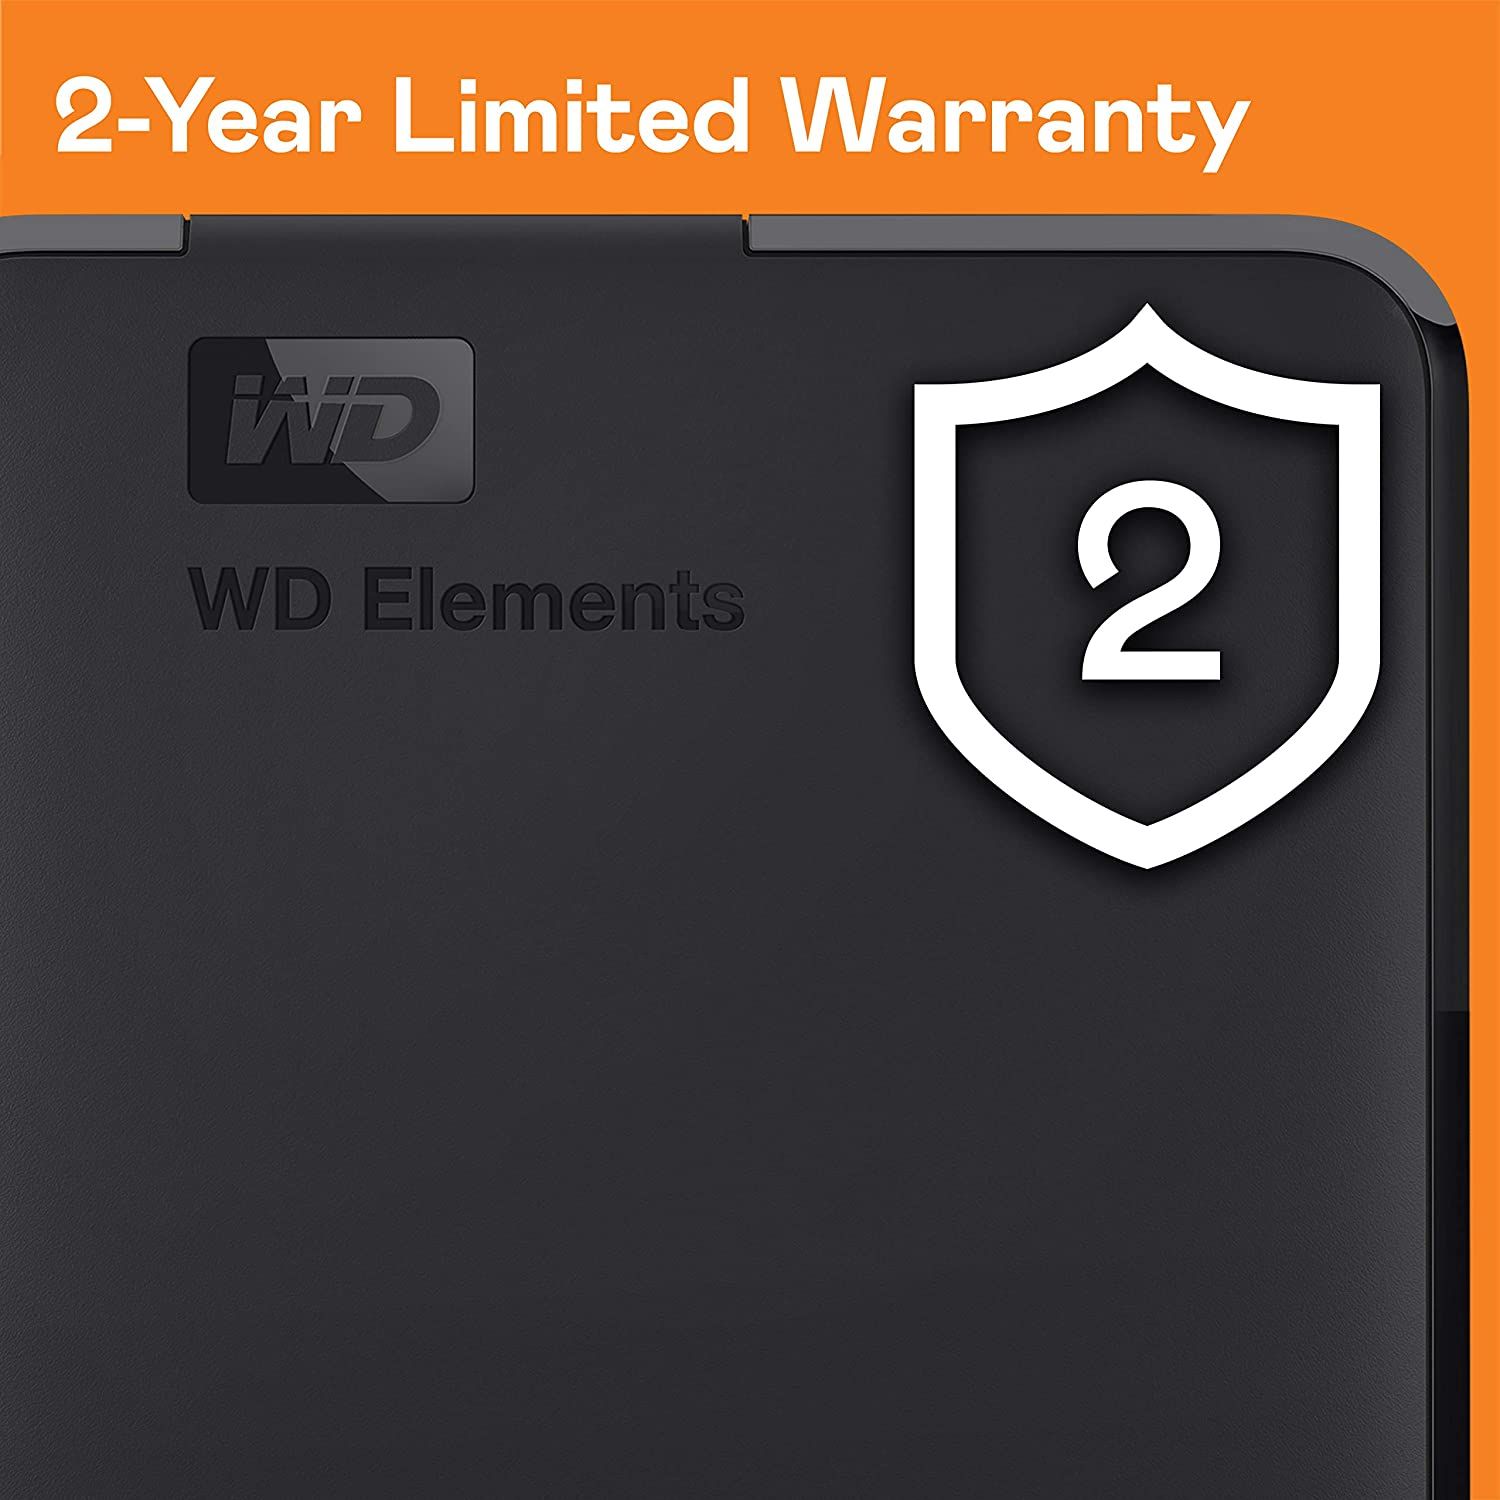 WD Elements 2TB warranty